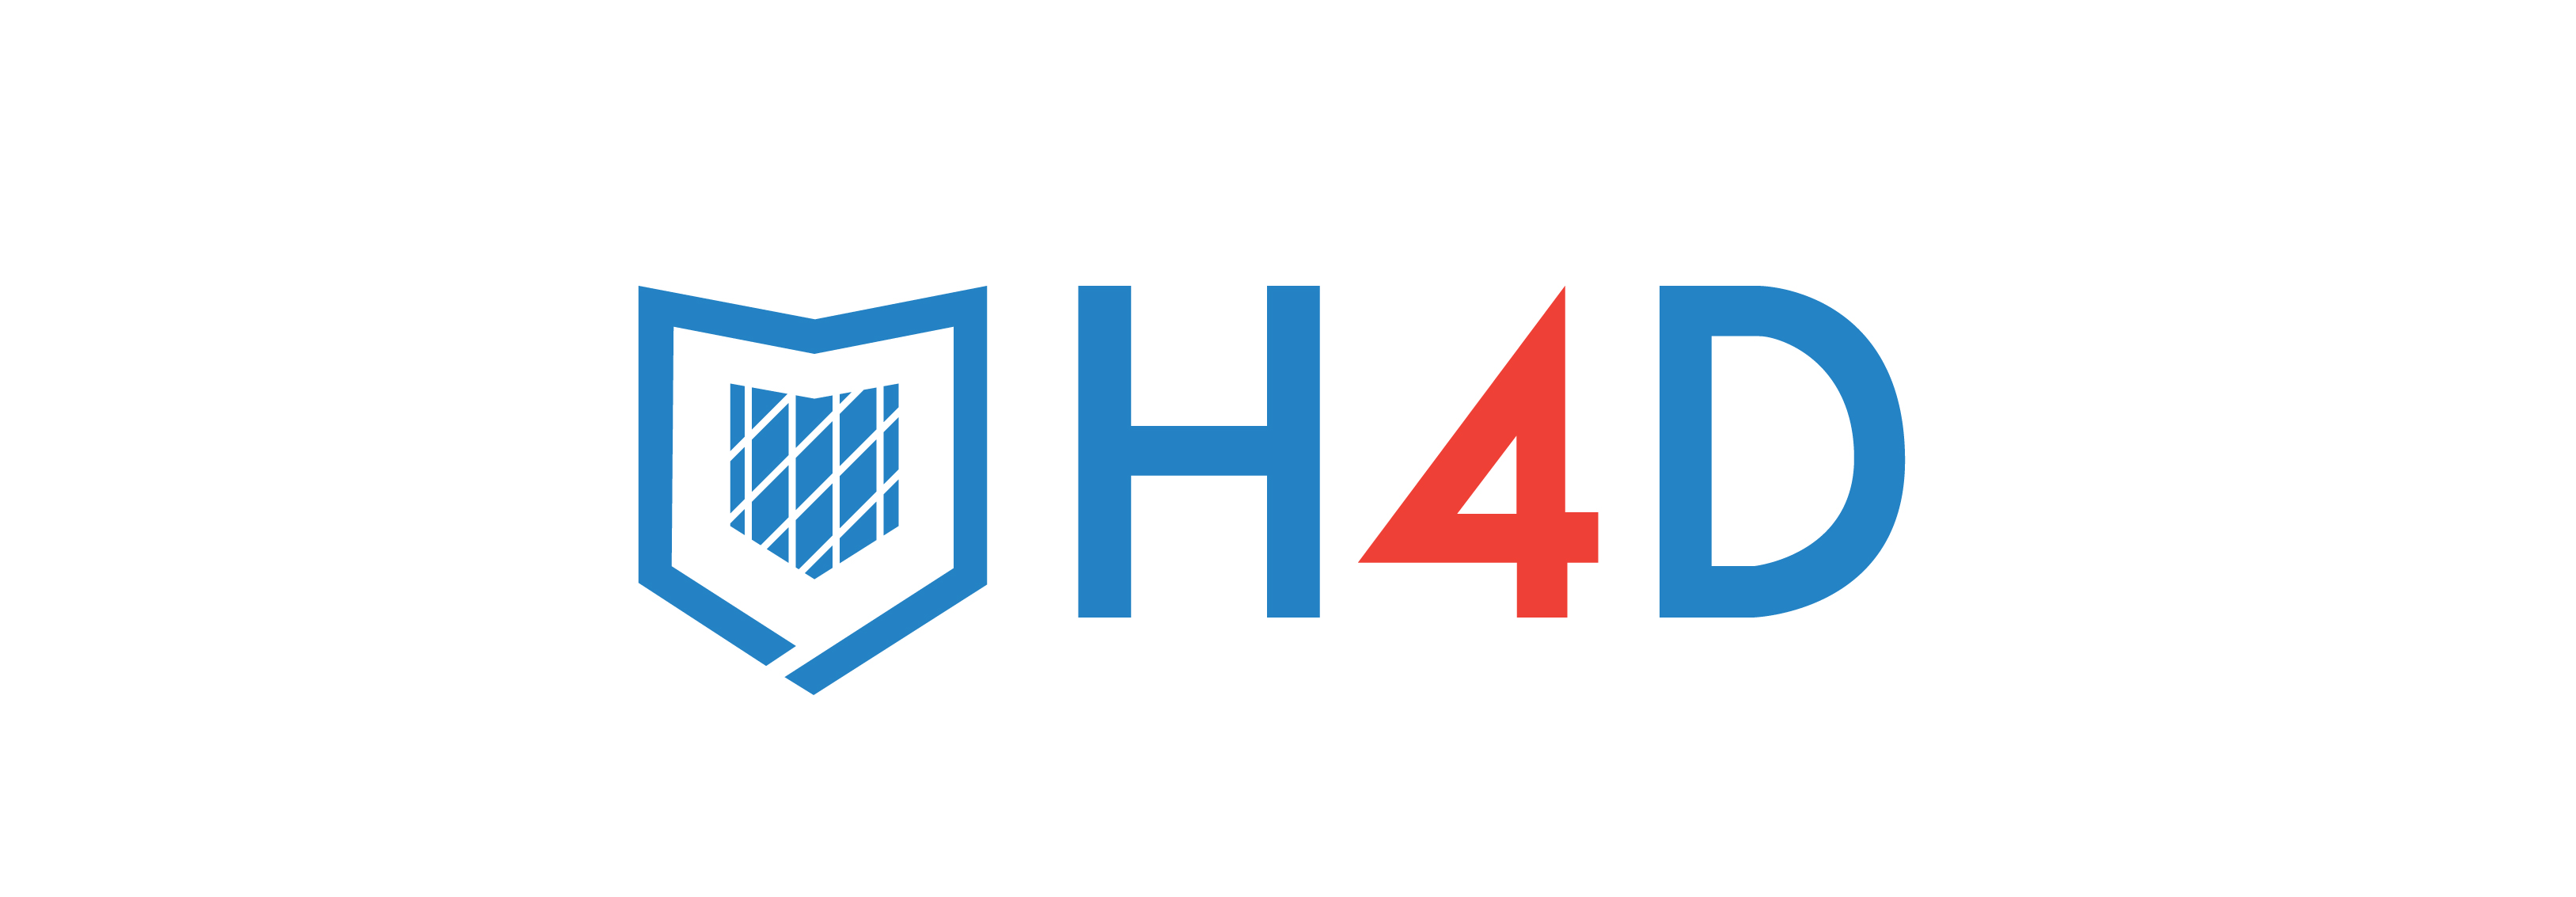 Hacking for Defense Logo image